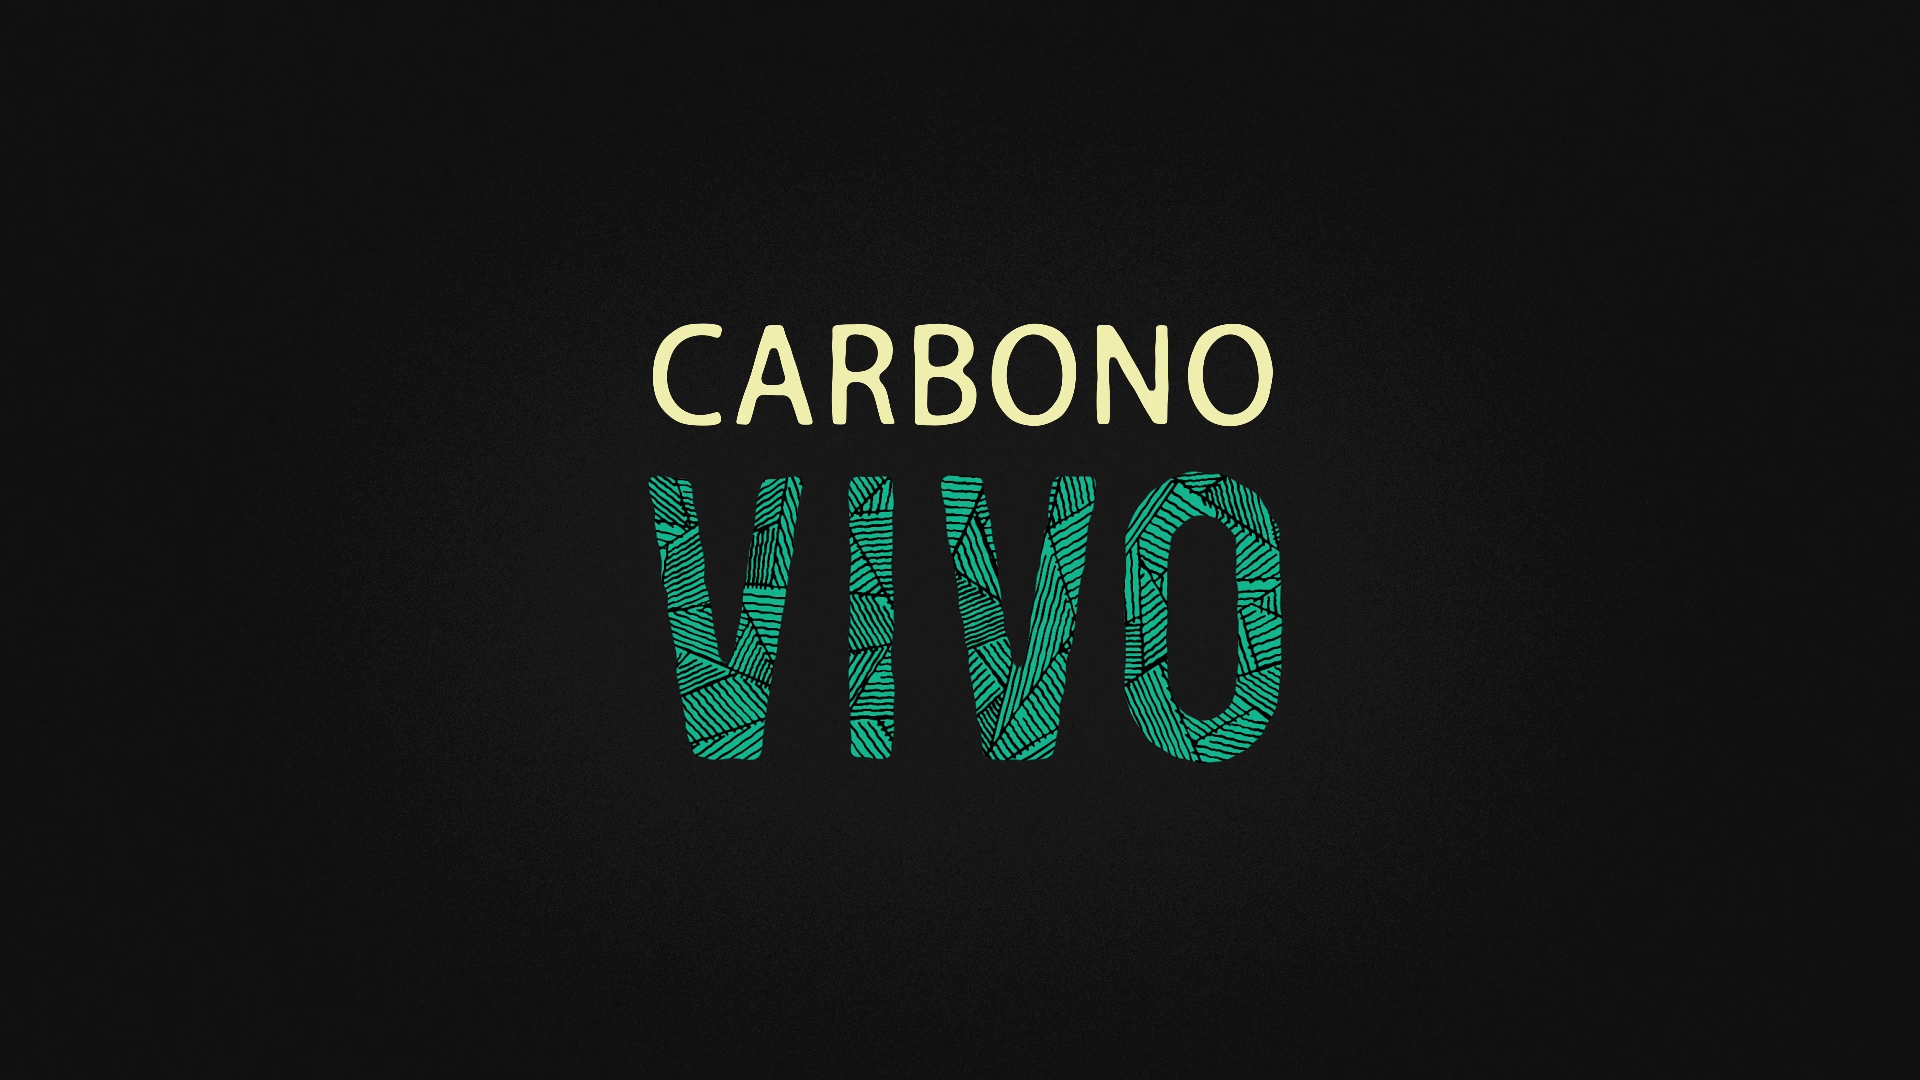 Carbono Vivo